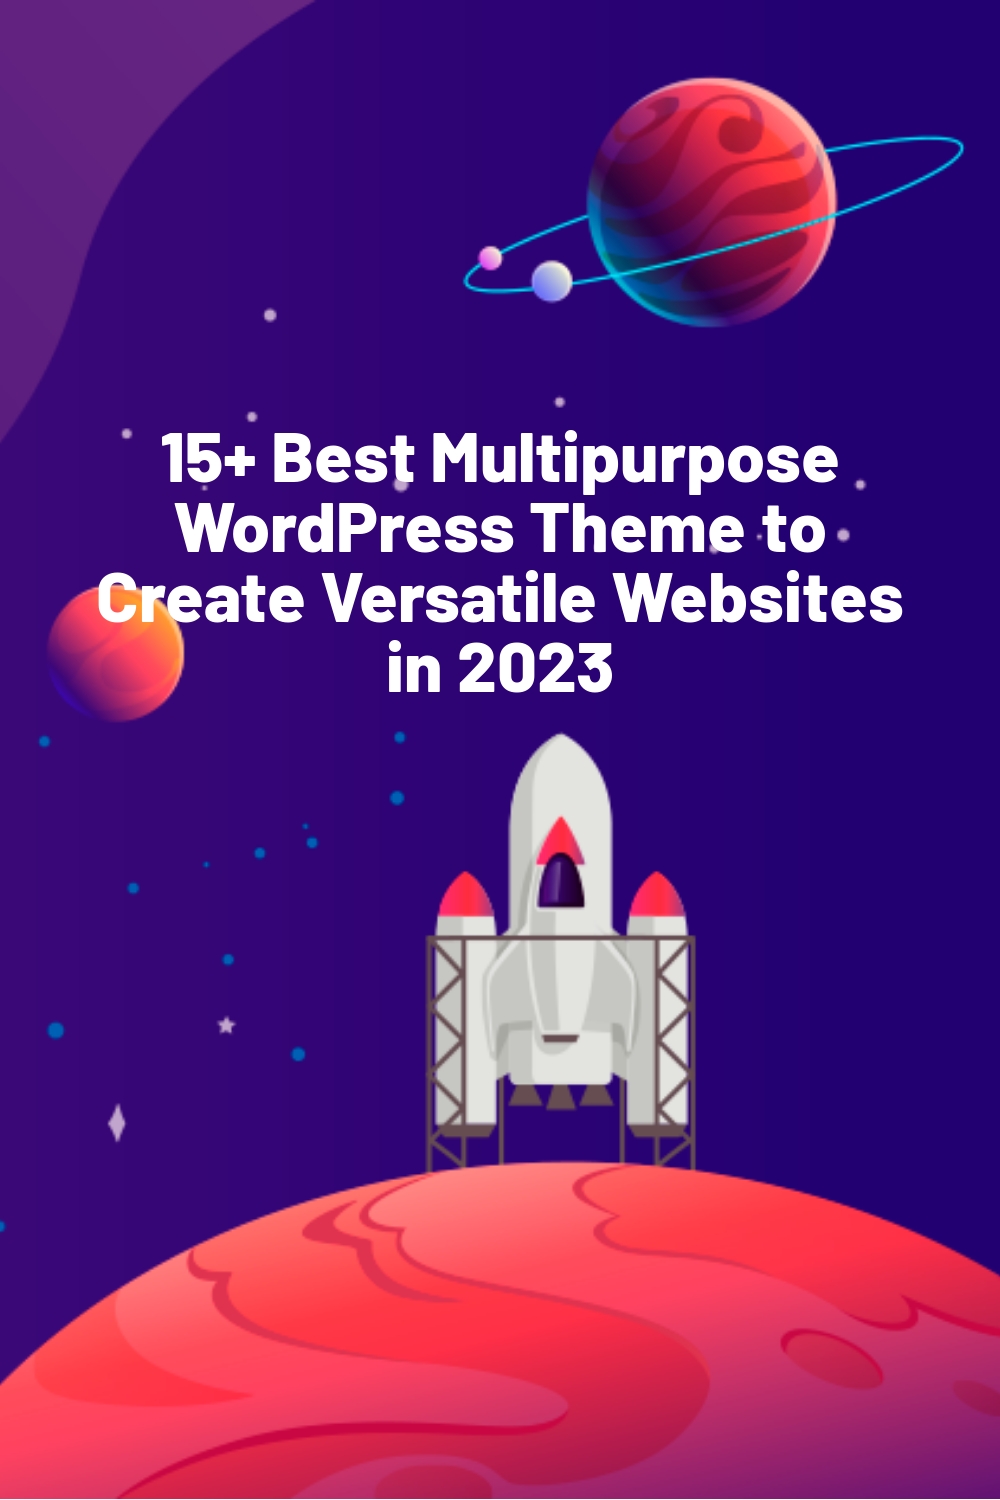 15+ Best Multipurpose WordPress Theme to Create Versatile Websites in 2023